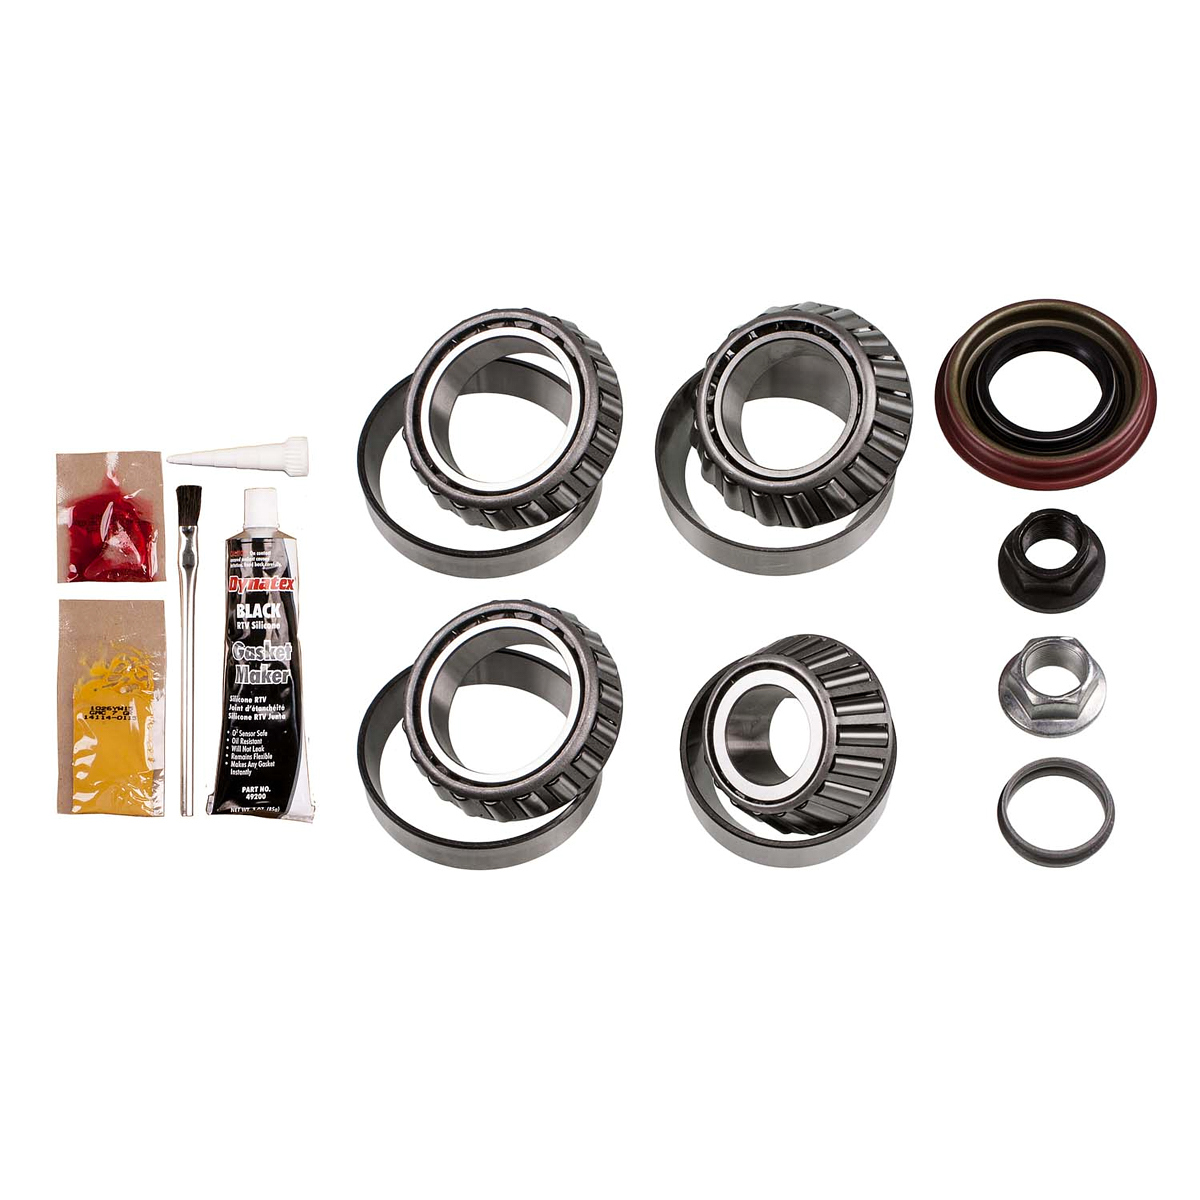 Motive Gear R9.75FRL - Differential Bearing Kit, Bearings / Crush Sleeve / RTV / Seal / Pinion Nut / Thread Locker, Ford 9.75 in, Kit